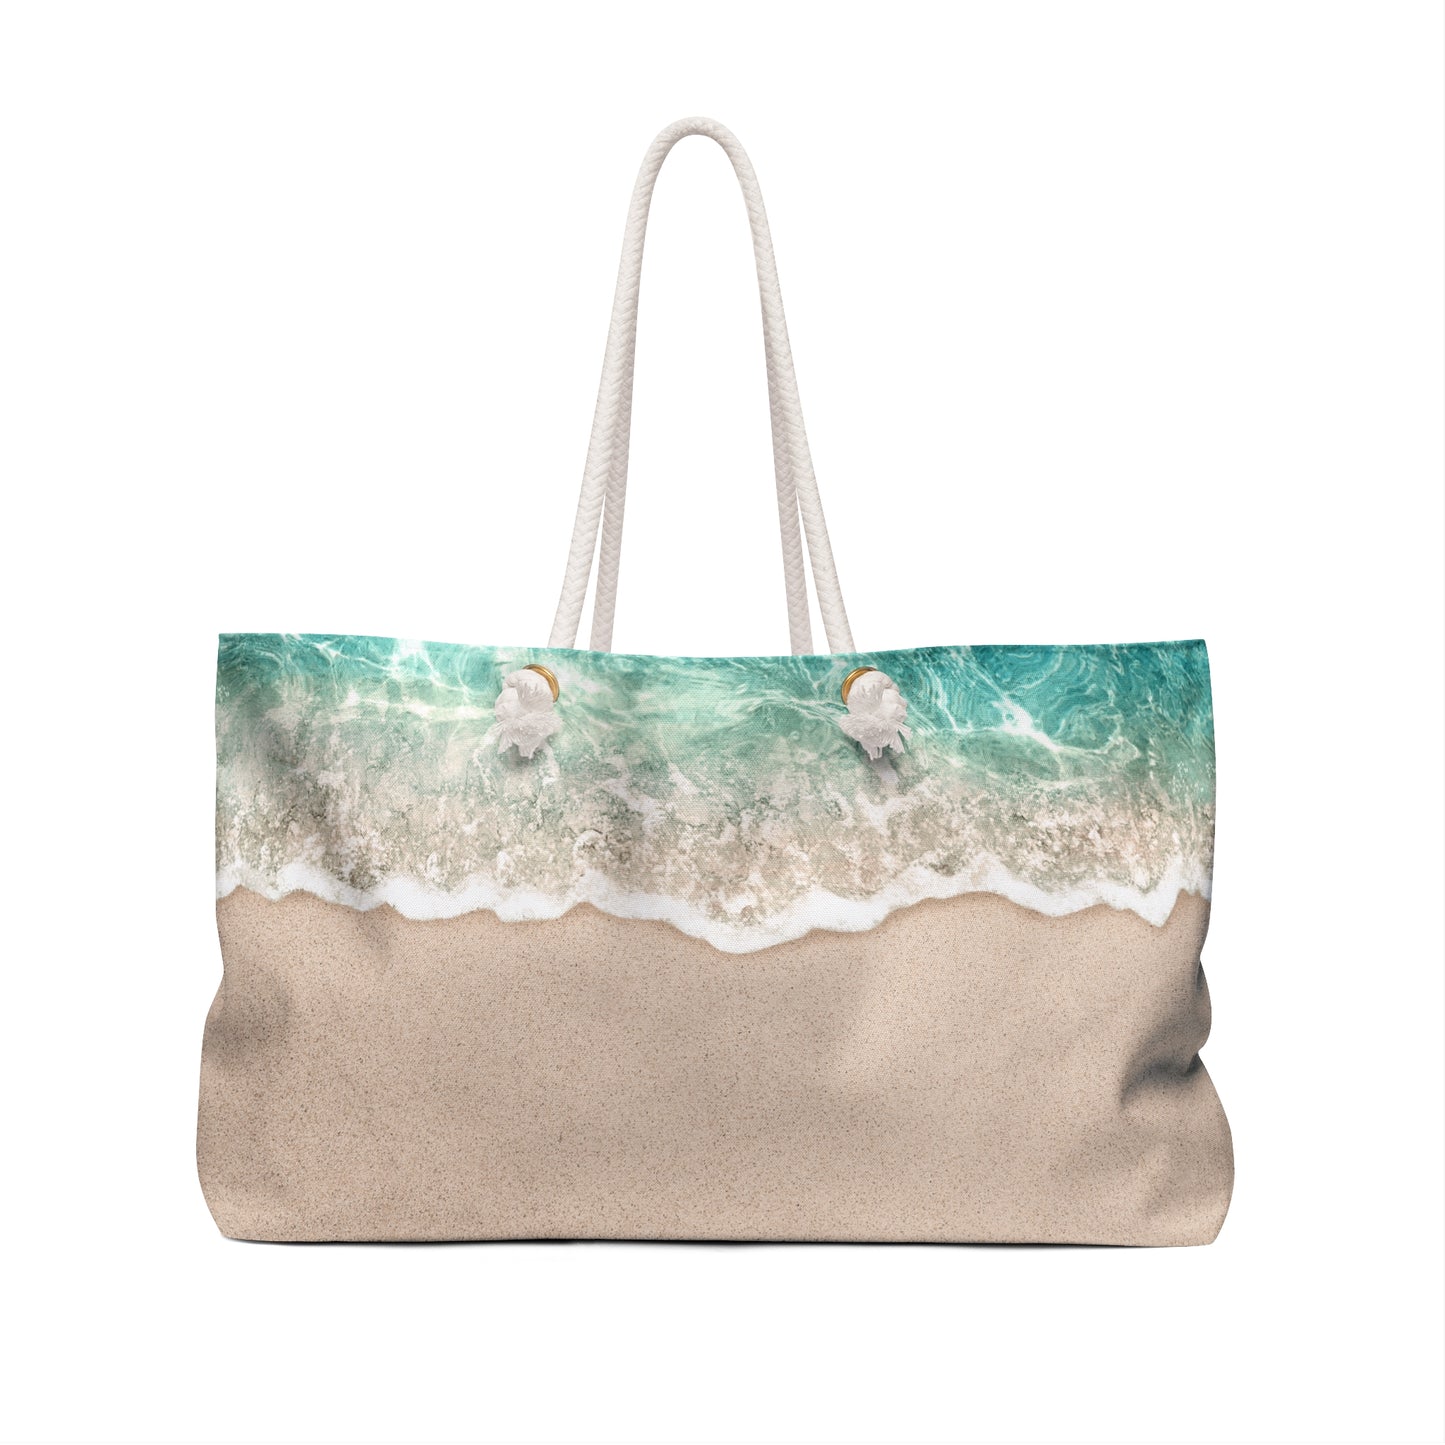 Personalized Beach Vacation Bag / Weekender Bag